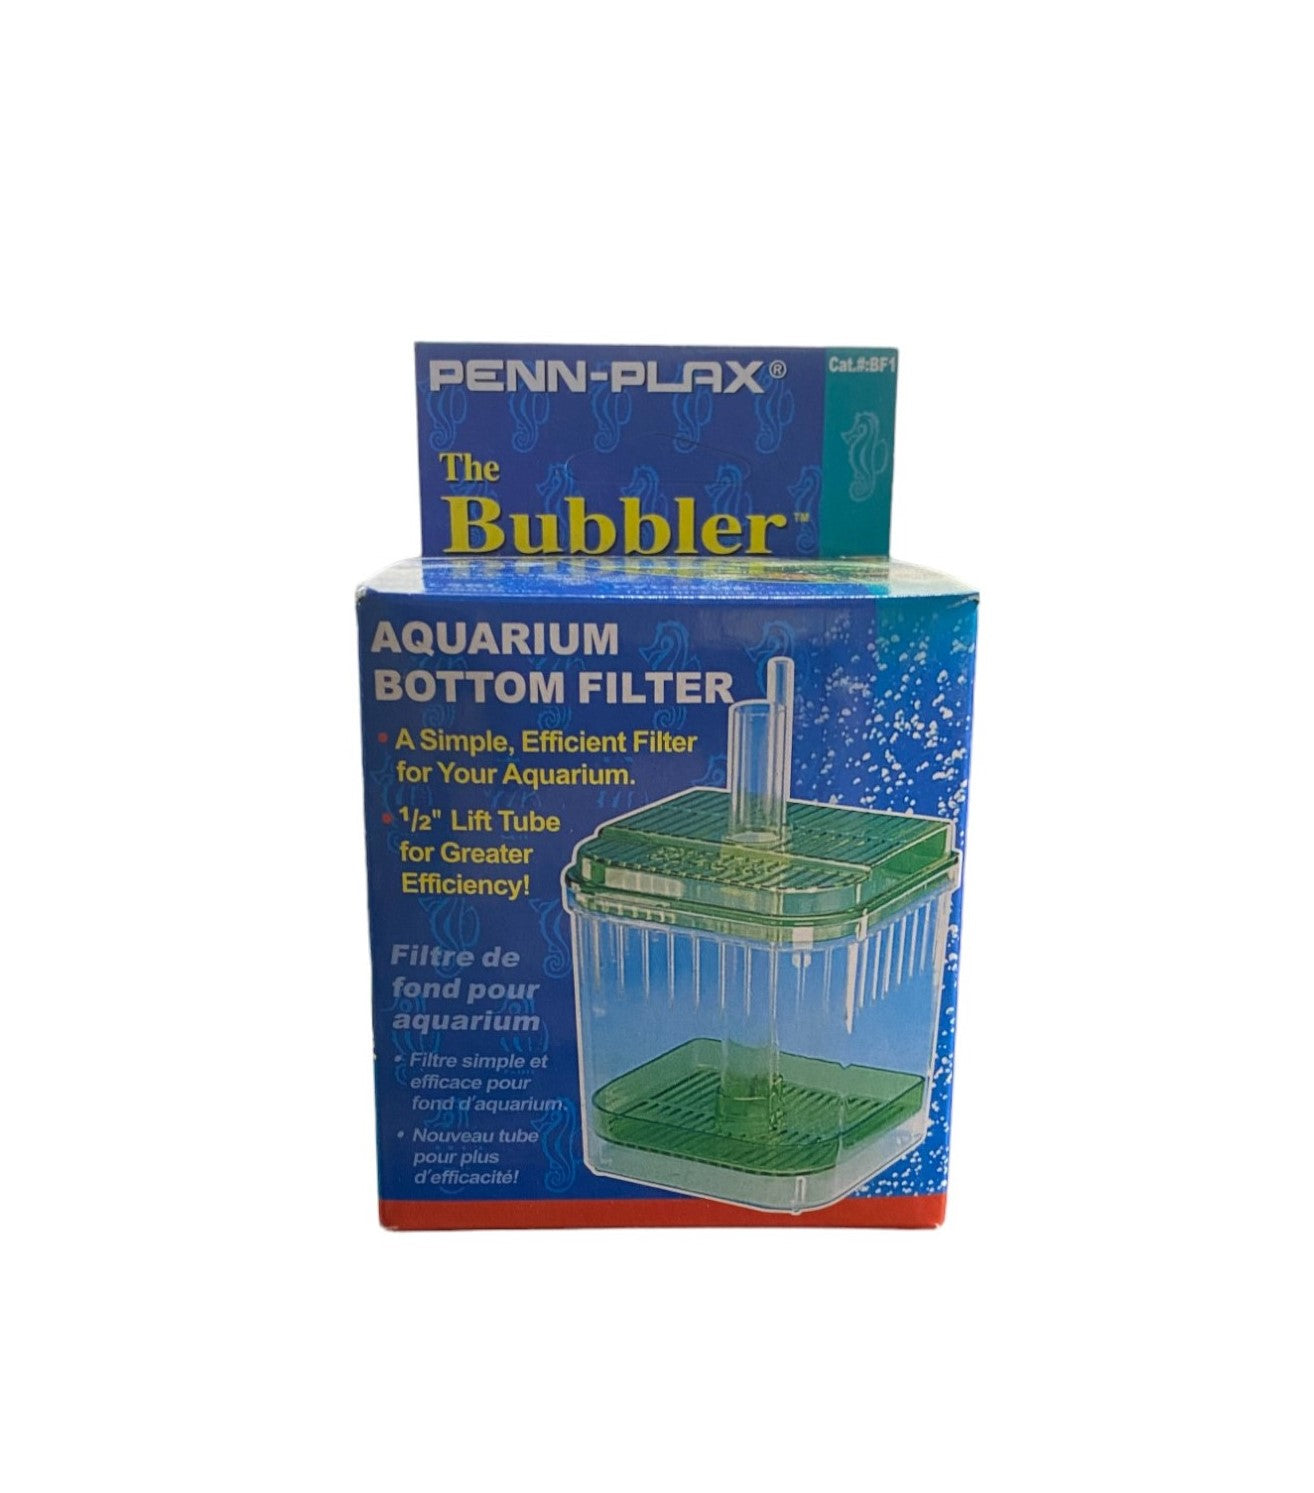 Penn Plax Aquarium Bottom Filter "The Bubbler" Box Filter Part # BF1